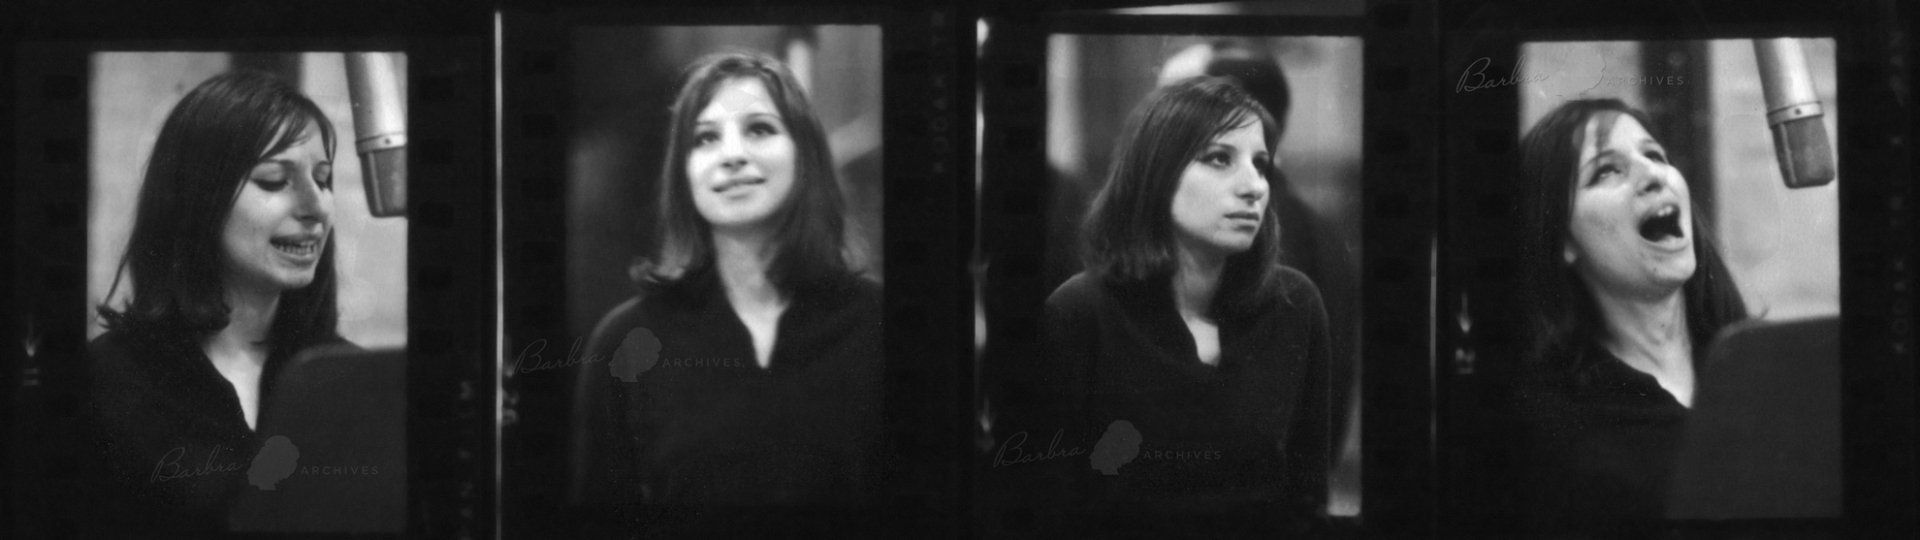 Barbra Streisand recording her first singles, October 16, 1962.